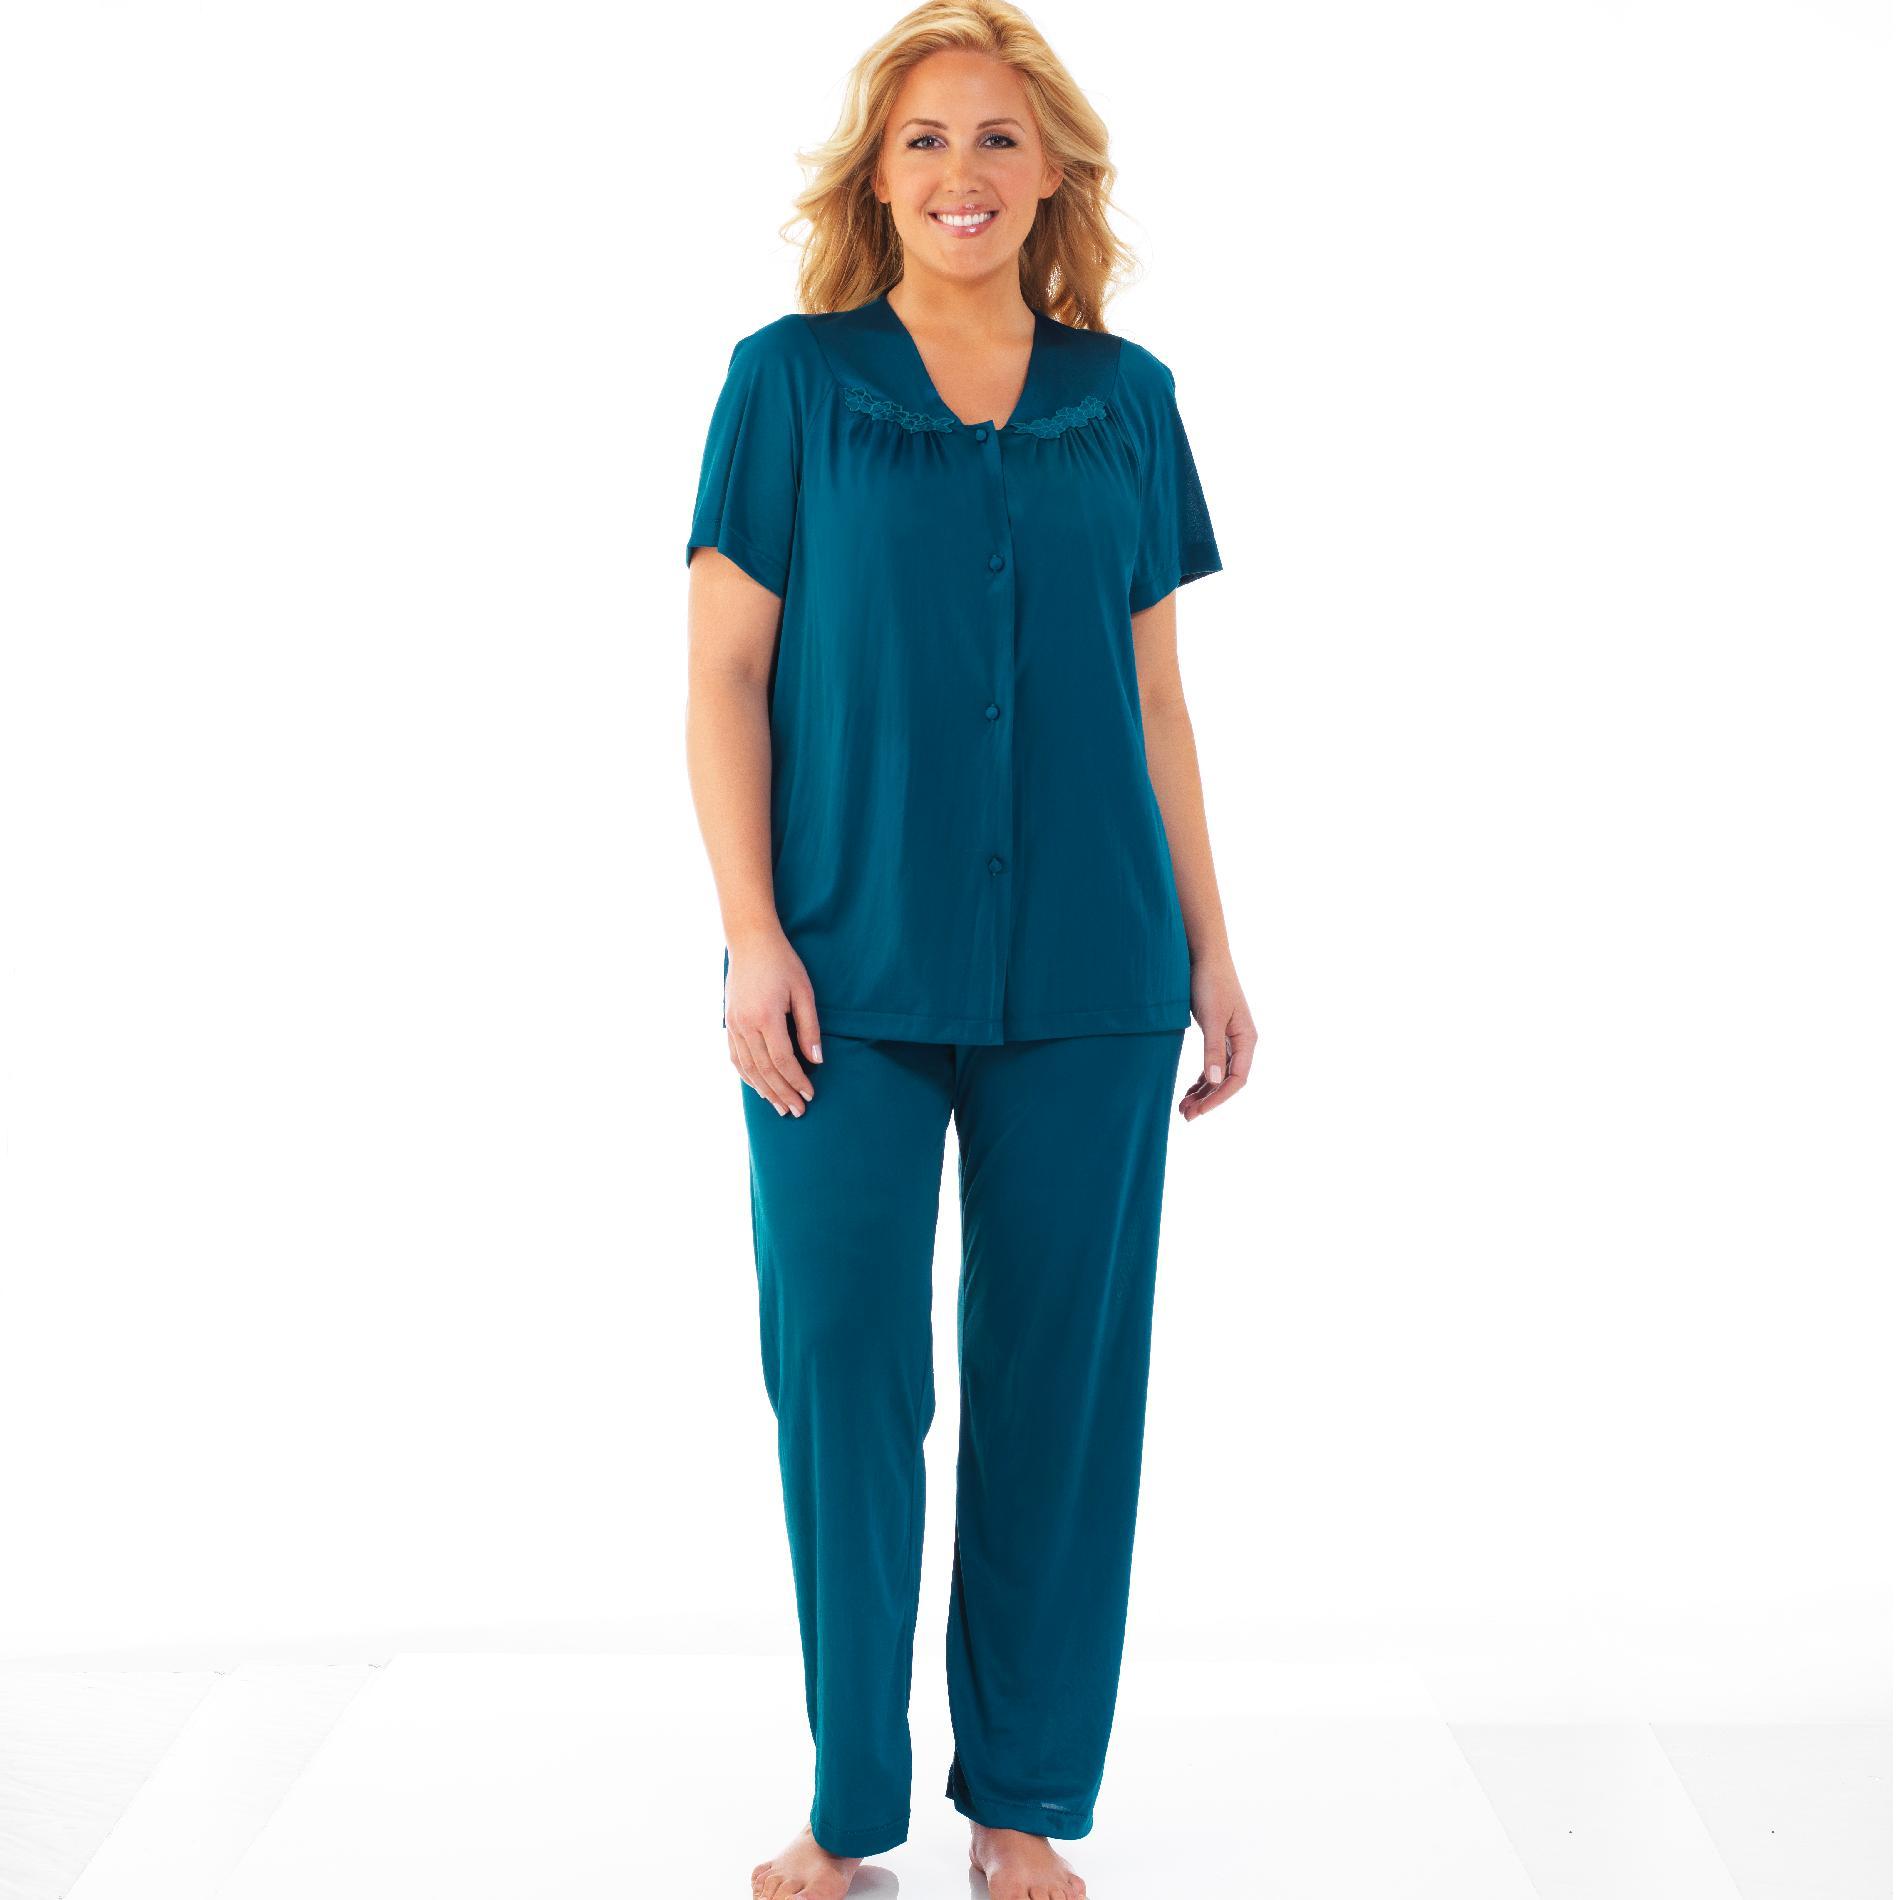 UPC 083621245906 product image for Women's Vanity Fair Colortura Short Sleeve Pajama Set | upcitemdb.com